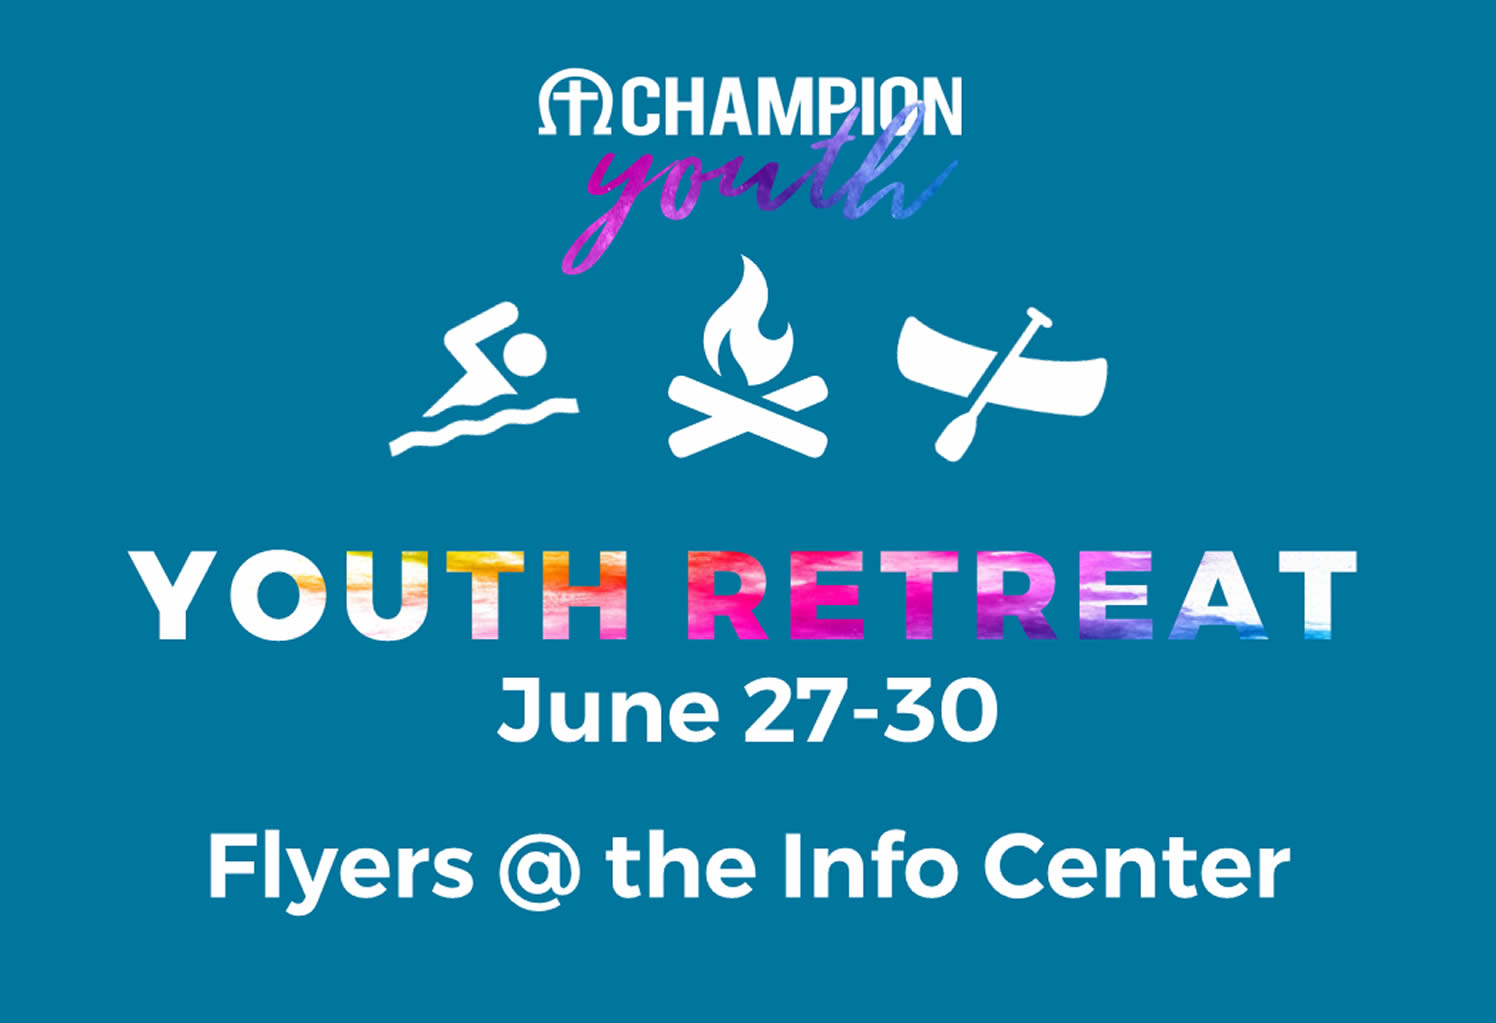 Youth Retreat